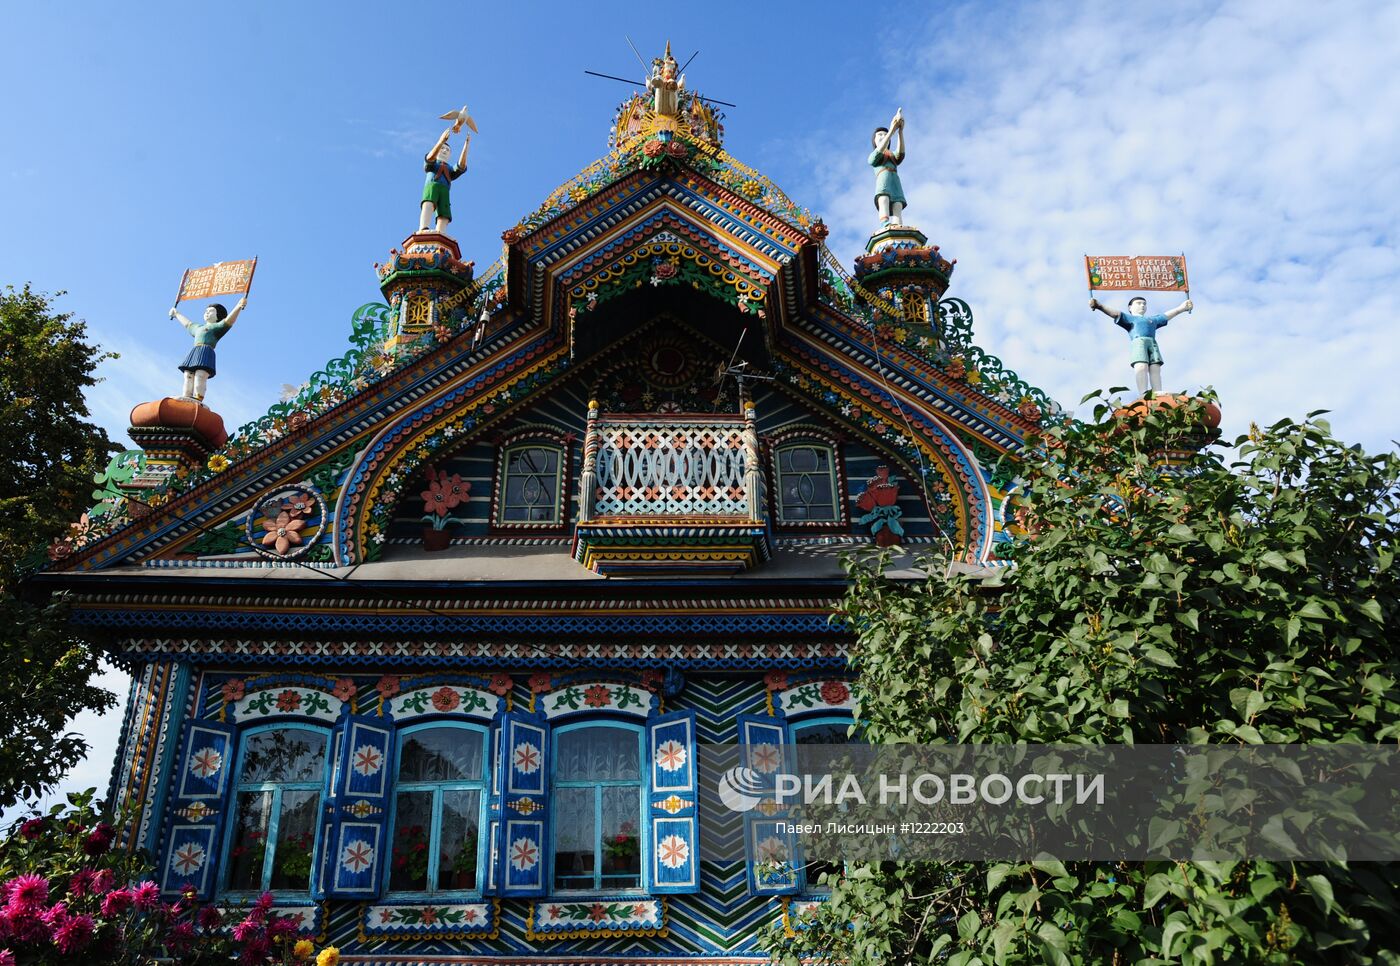 Дом кузнеца Кириллова в деревне Кунара Свердловской области